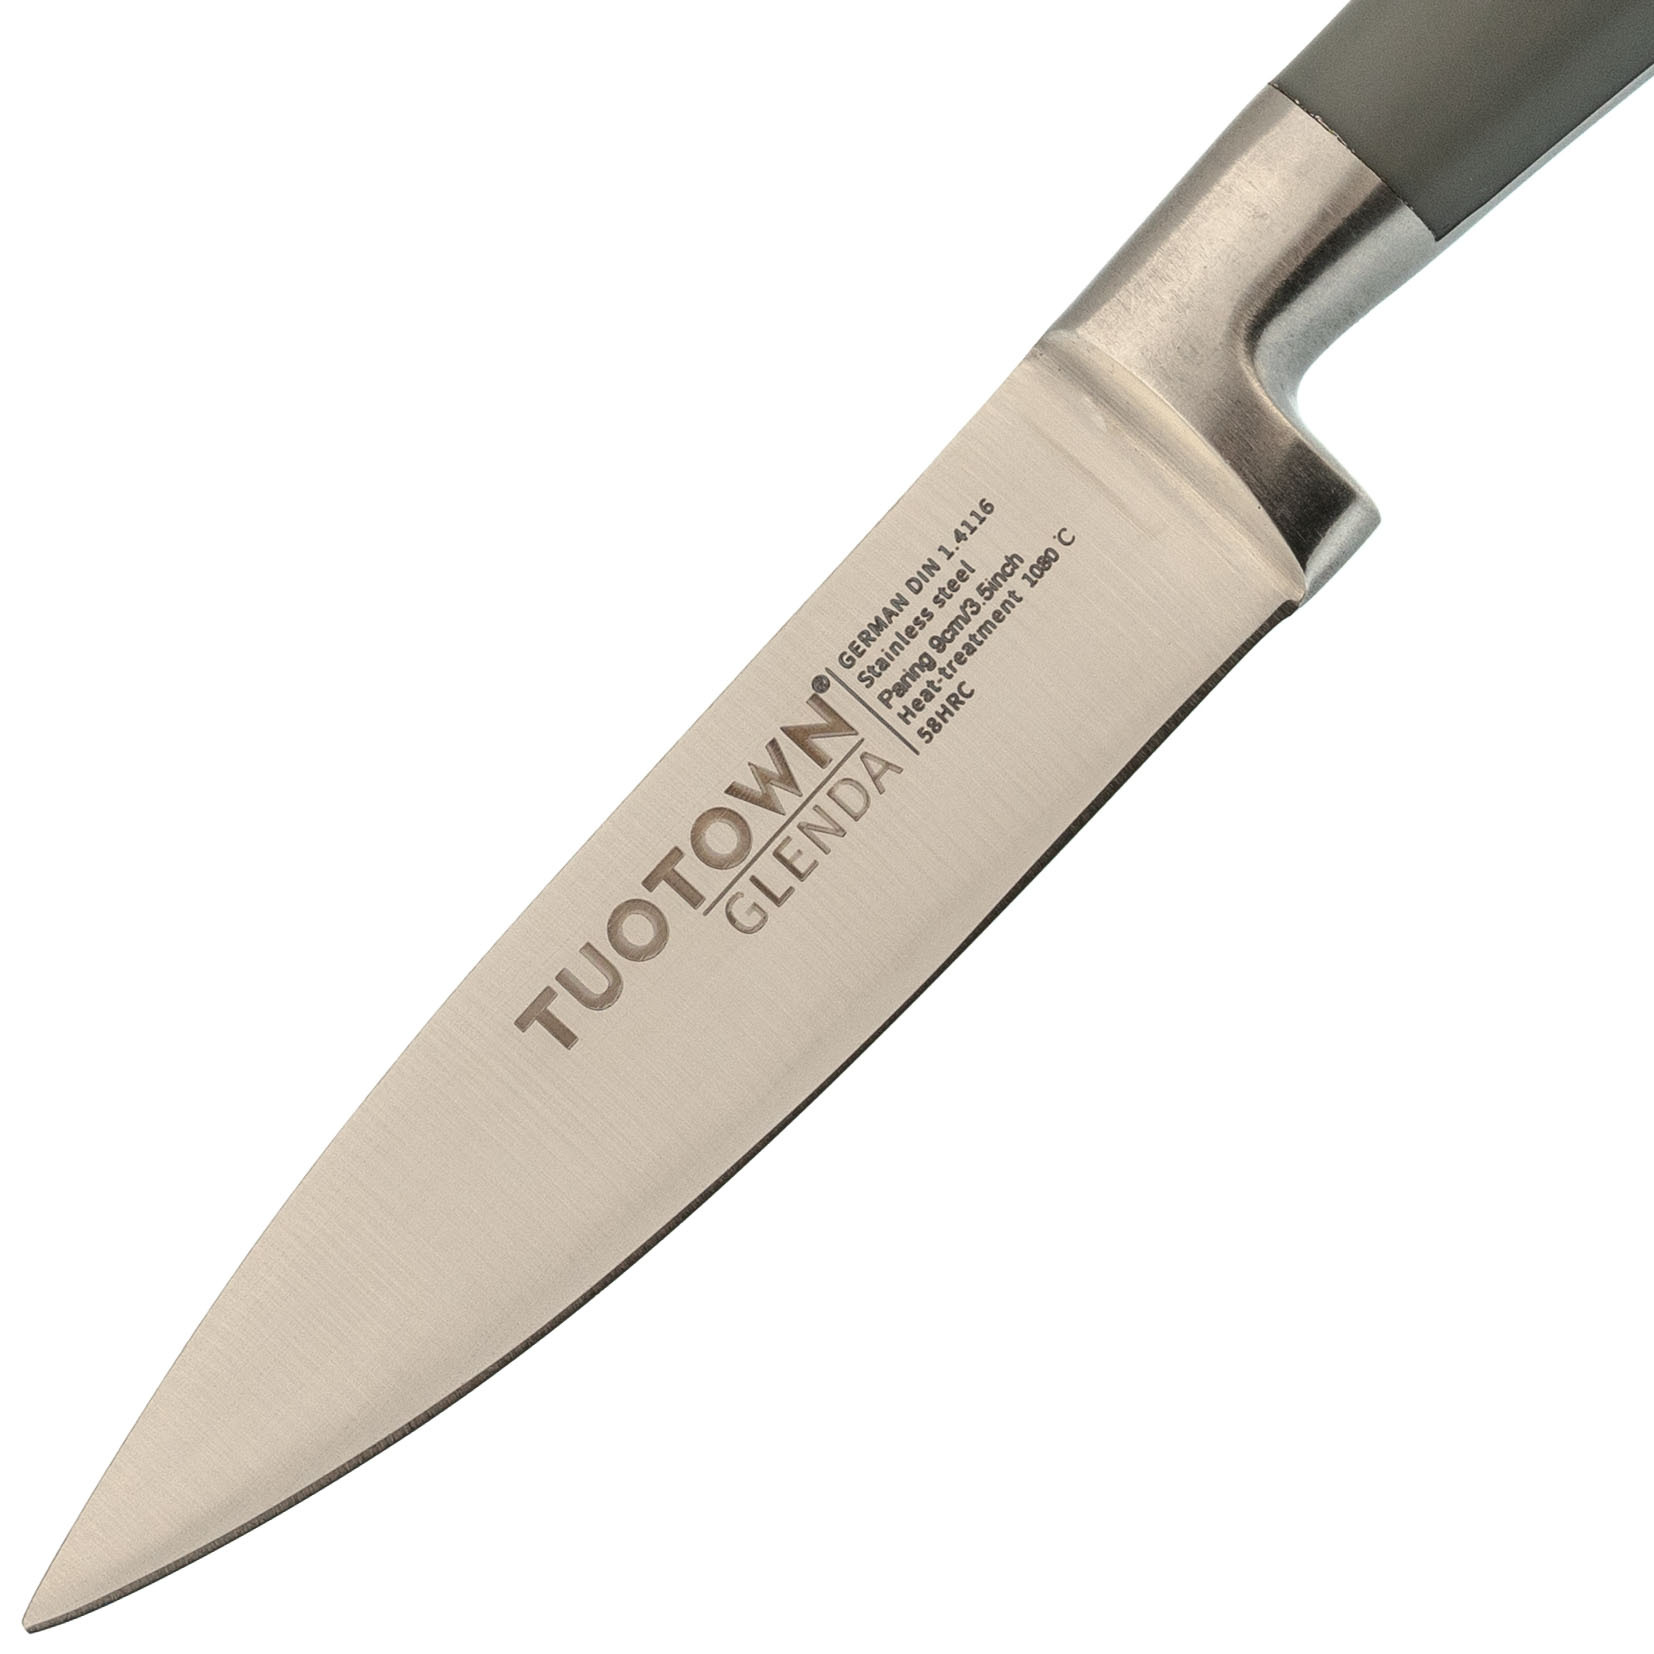 Кухонный нож овощной Tuotown, сталь 1.4116, пластик - фото 2